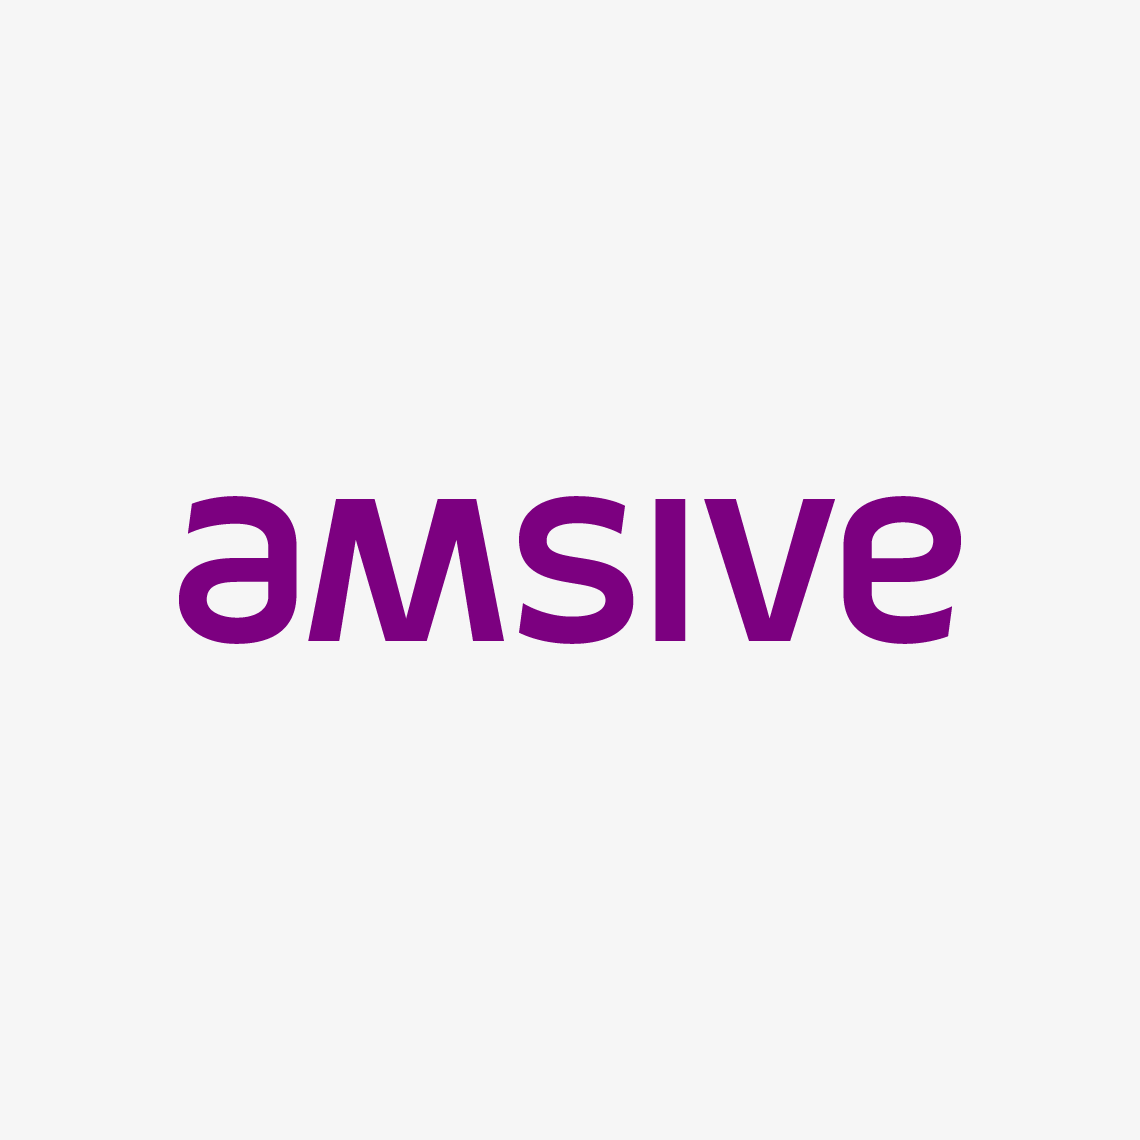 the new Amsive logo